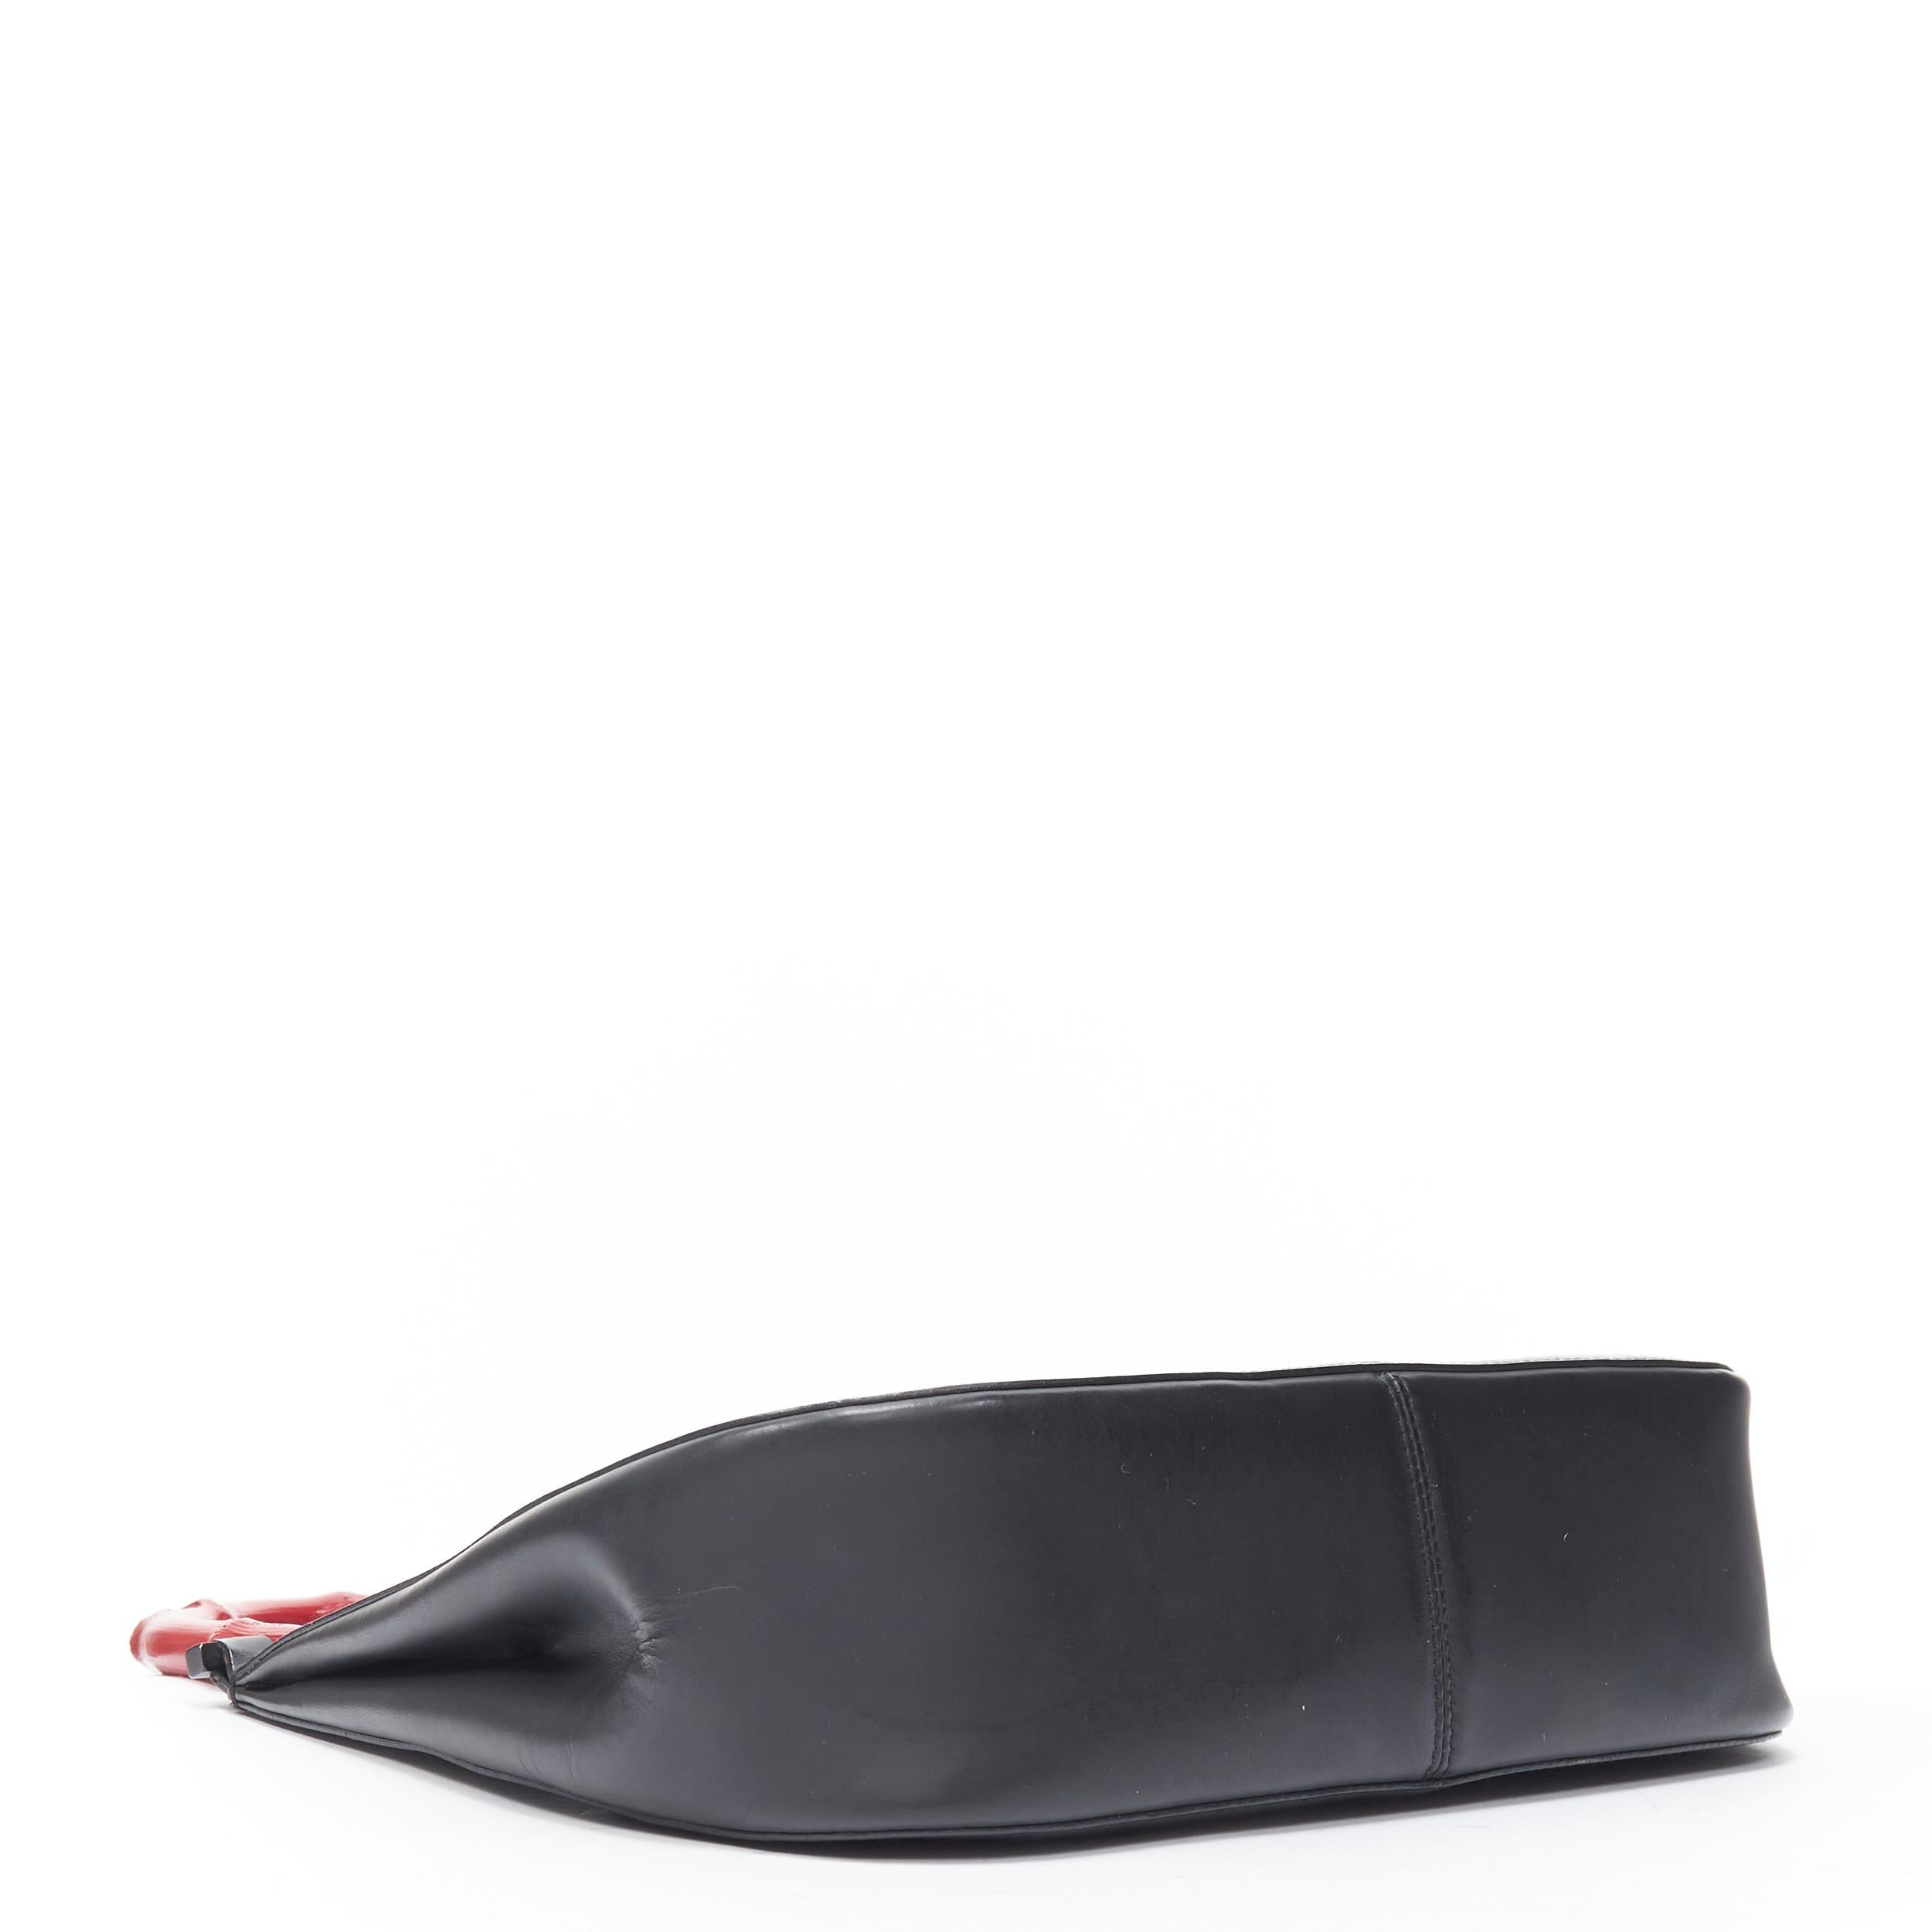 Black GUCCI red Bamboo handle black smooth leather structured shoulder bag